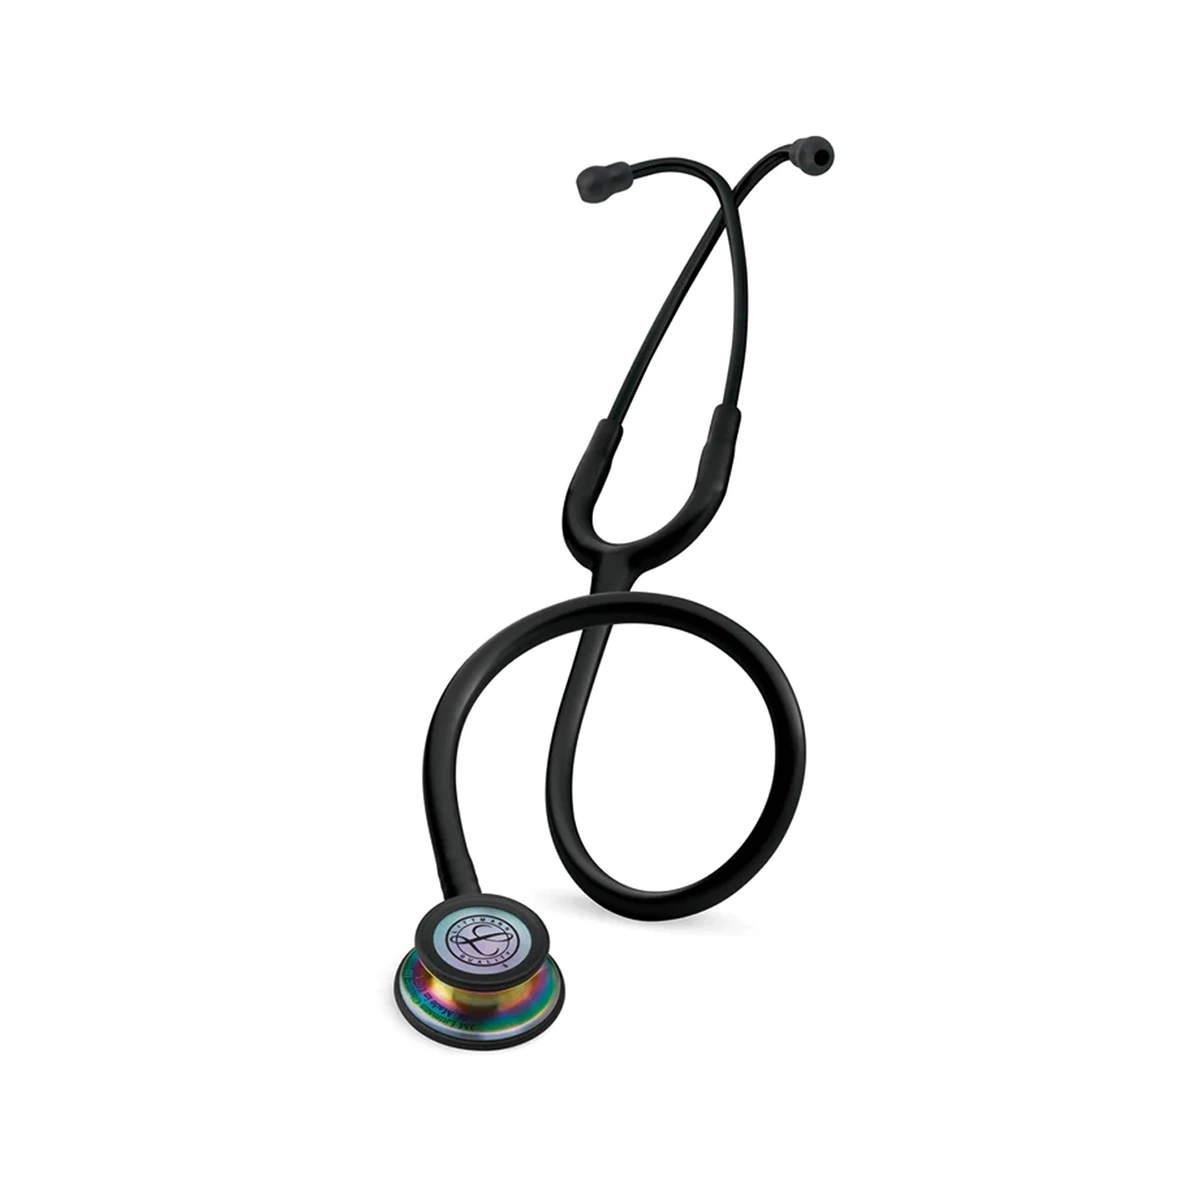 First product image of Littmann classic iii stethoscope 5870